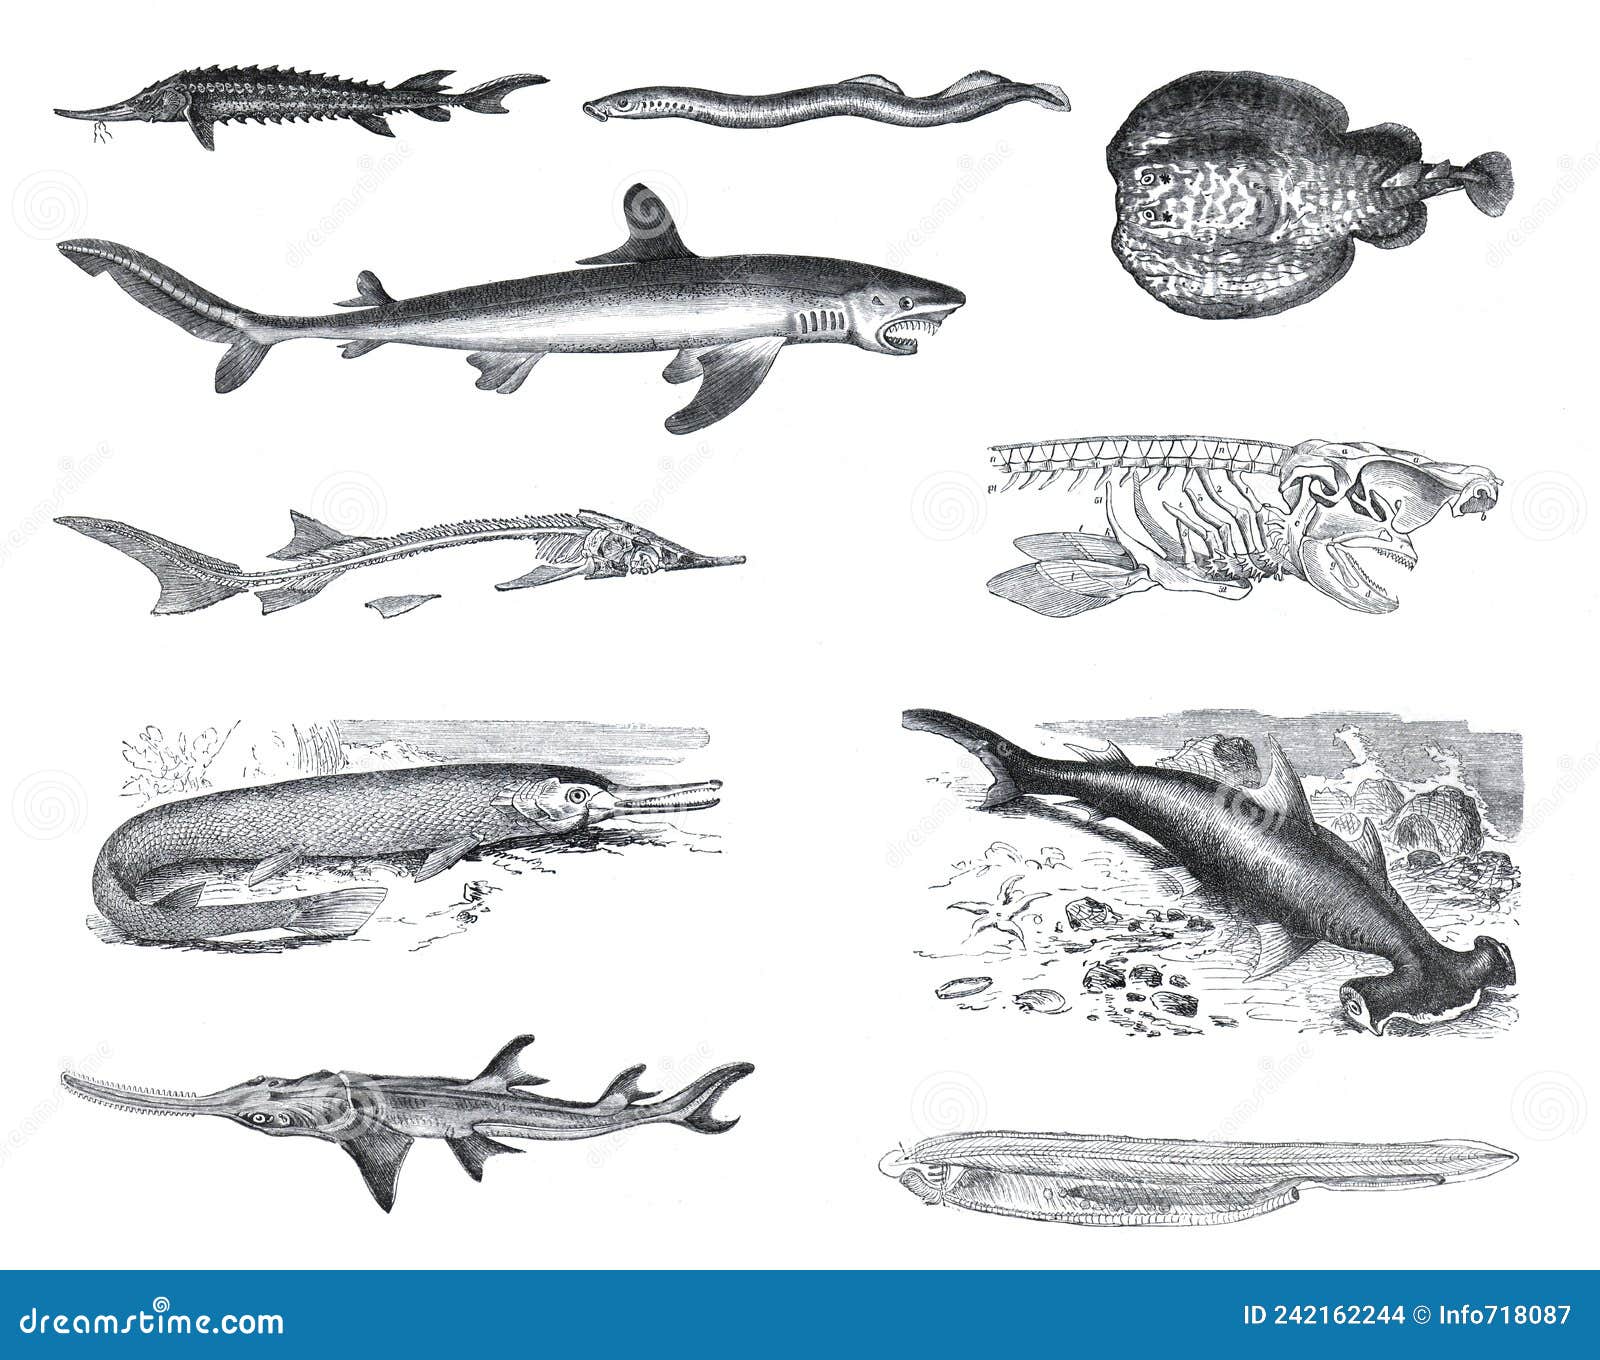 many different fish collection like sharks, zygaena malleus, pristis antiquerum, lepidosteus osseus, squalus carcharias, torpedo m